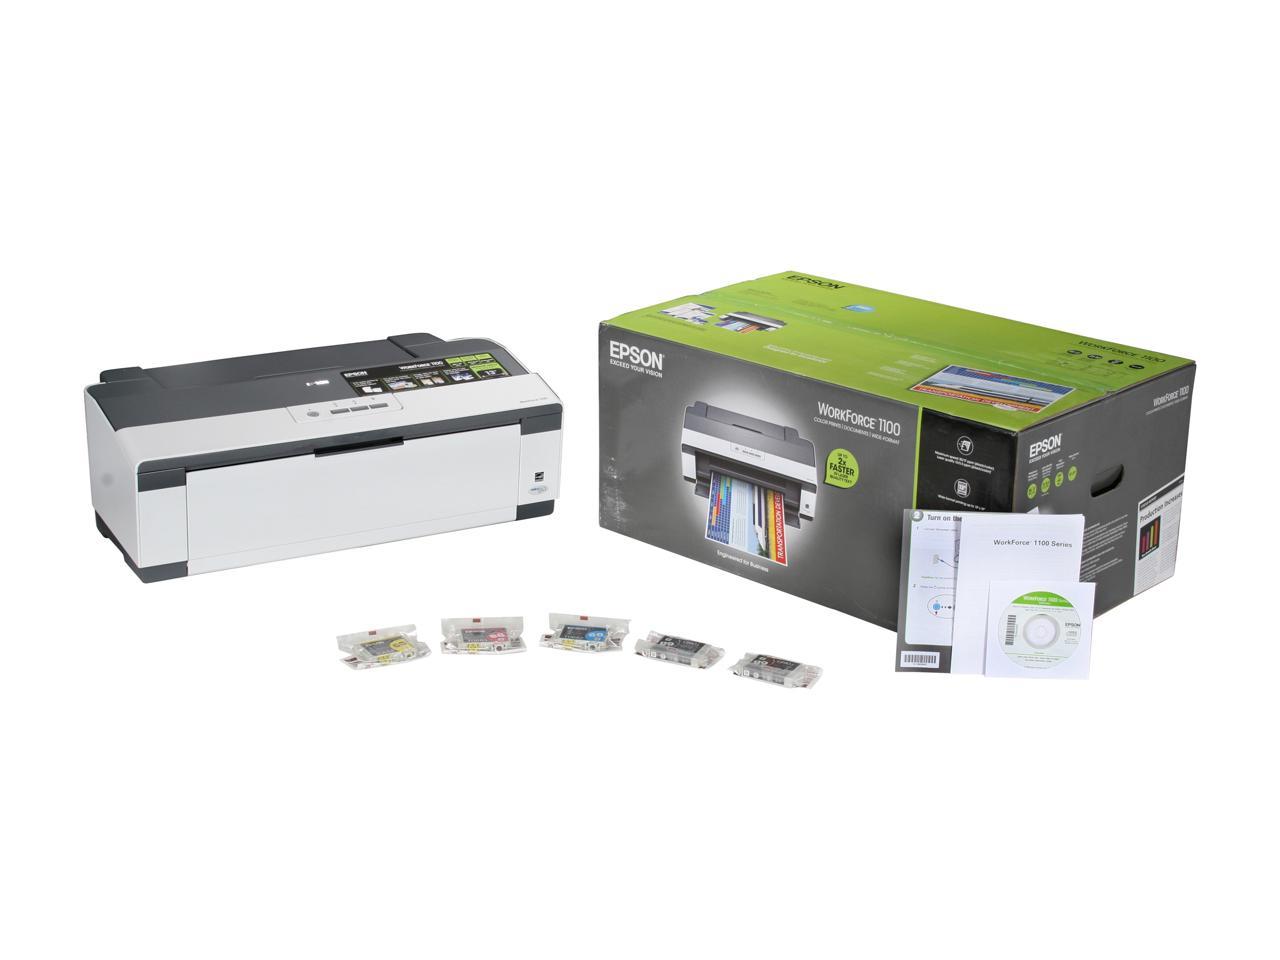 Epson Workforce 1100 C11ca58201 Usb Inkjet Color Printer